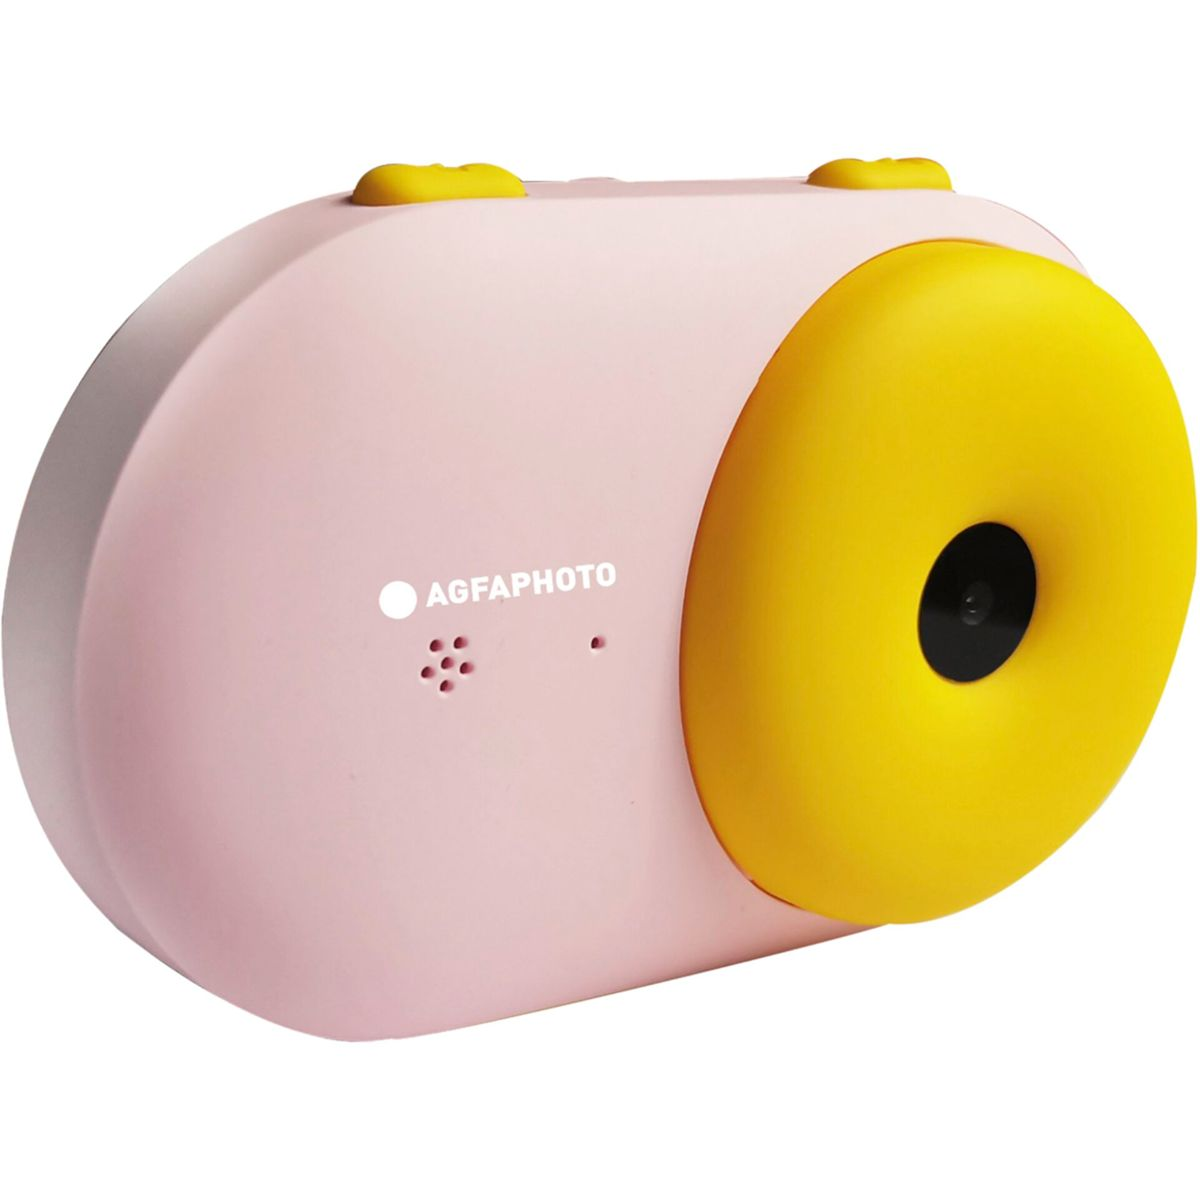 Realikids AGFAPHOTO pink Water KinderkameraUnterwasserkamera pink- Proof